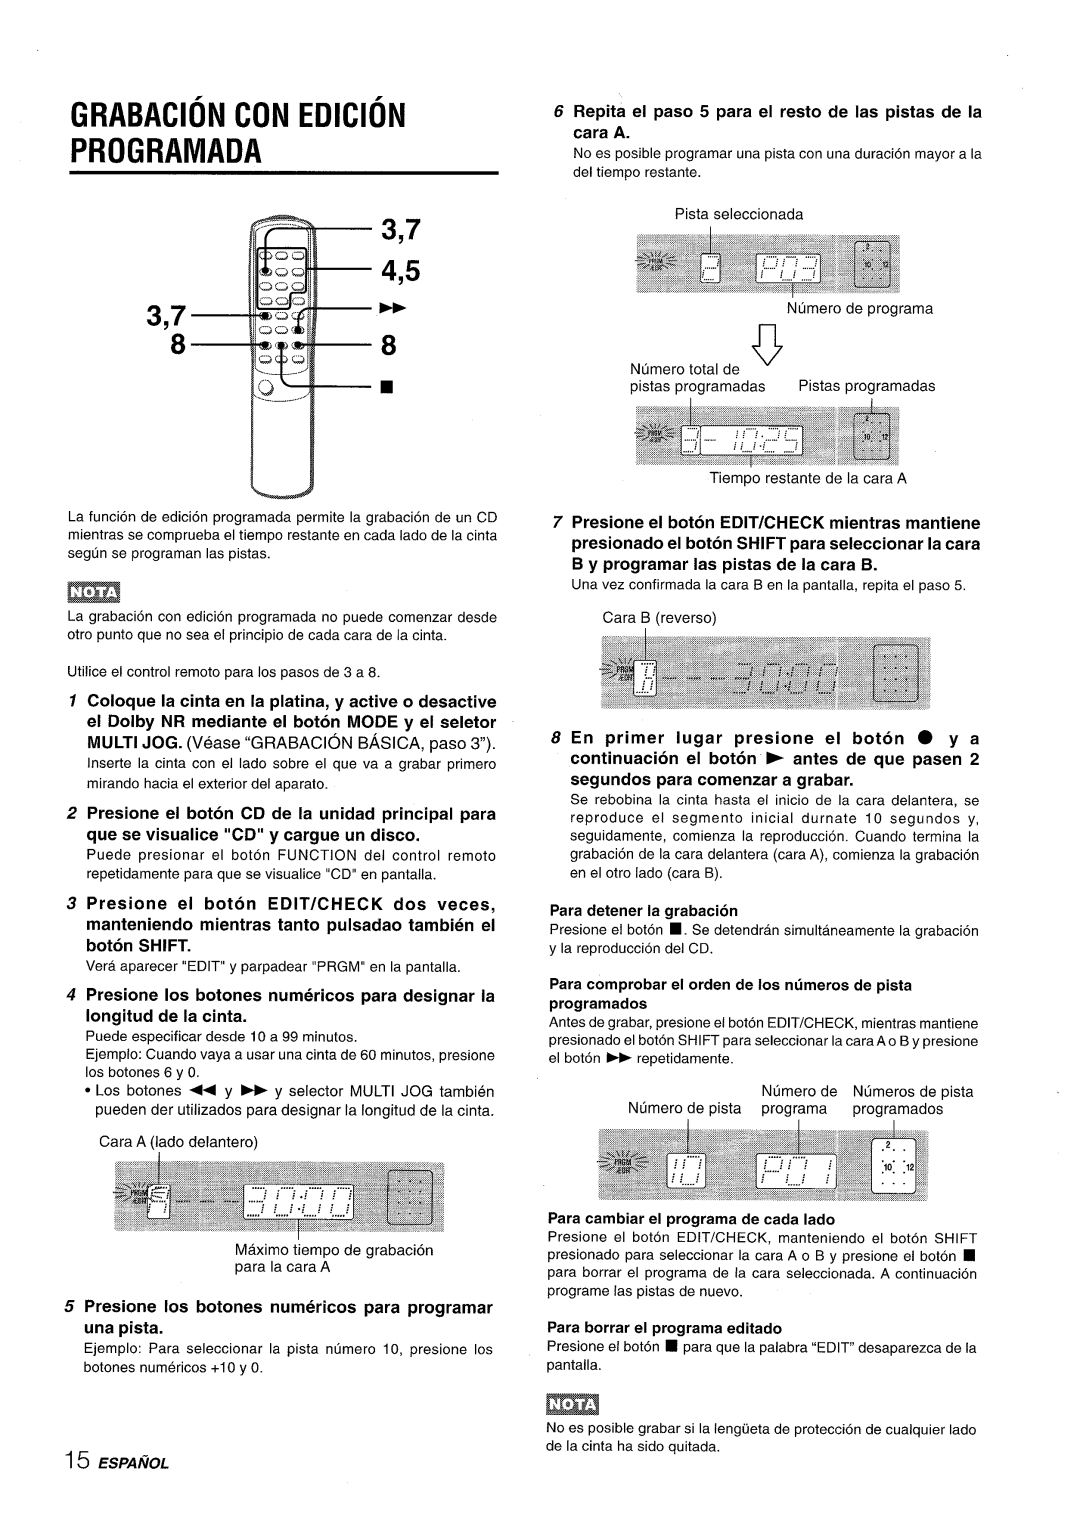 Aiwa XR-M35 manual Grabacion Con Edicion Programada, 3,7 4,5 3,7M, continuation el boton E antes de que pasen, ESPAfiOL 